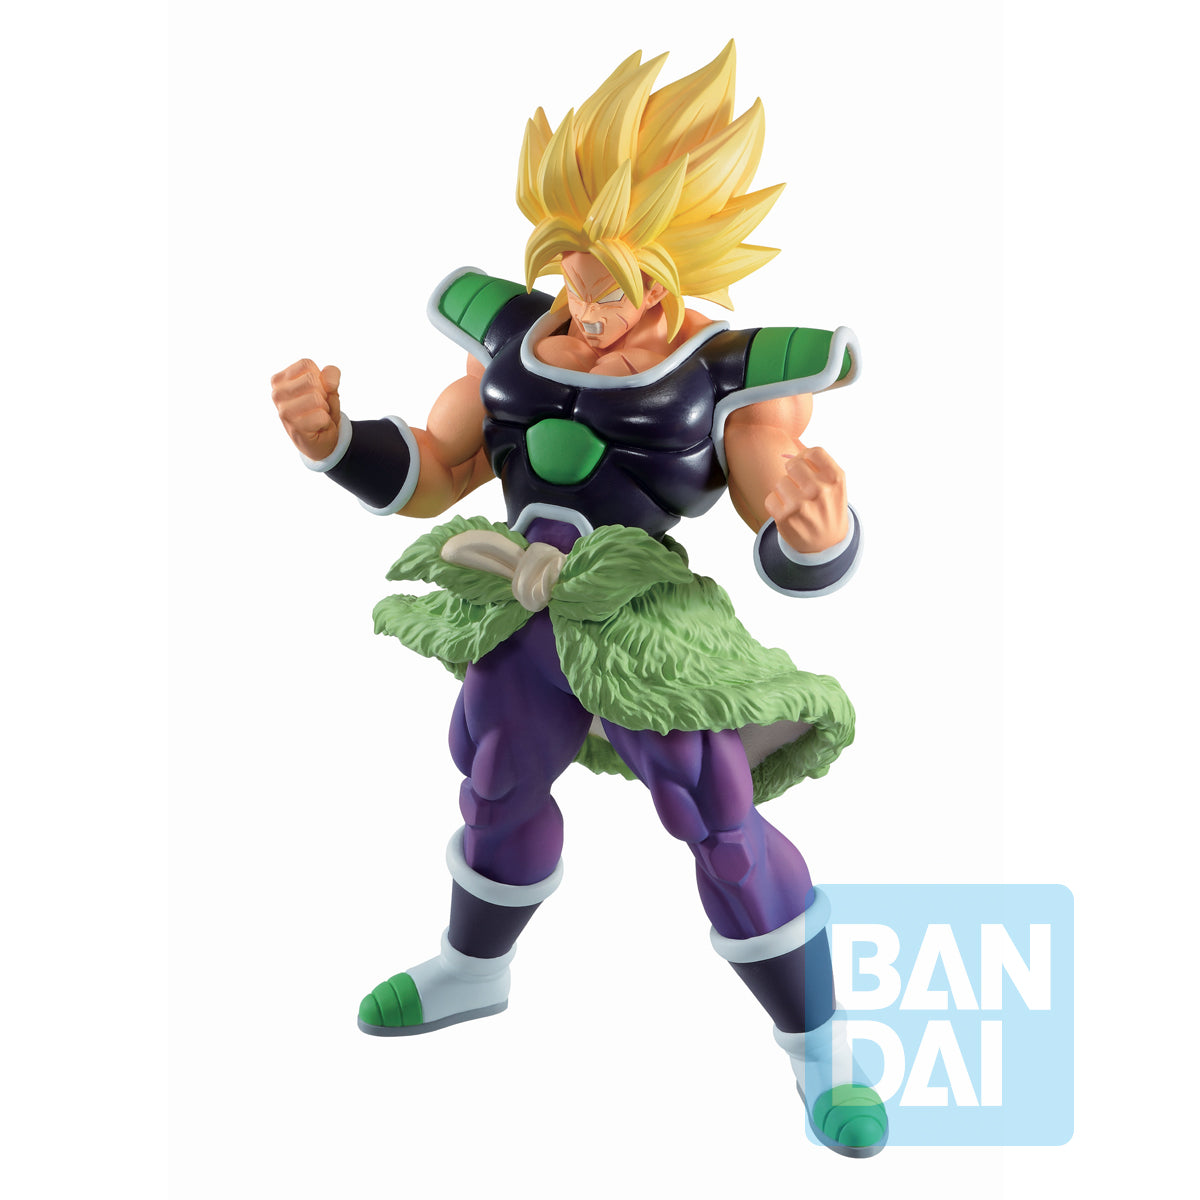 DRAGON BALL - Super Saiyan Broly - Figurine Ichibansho 26cm